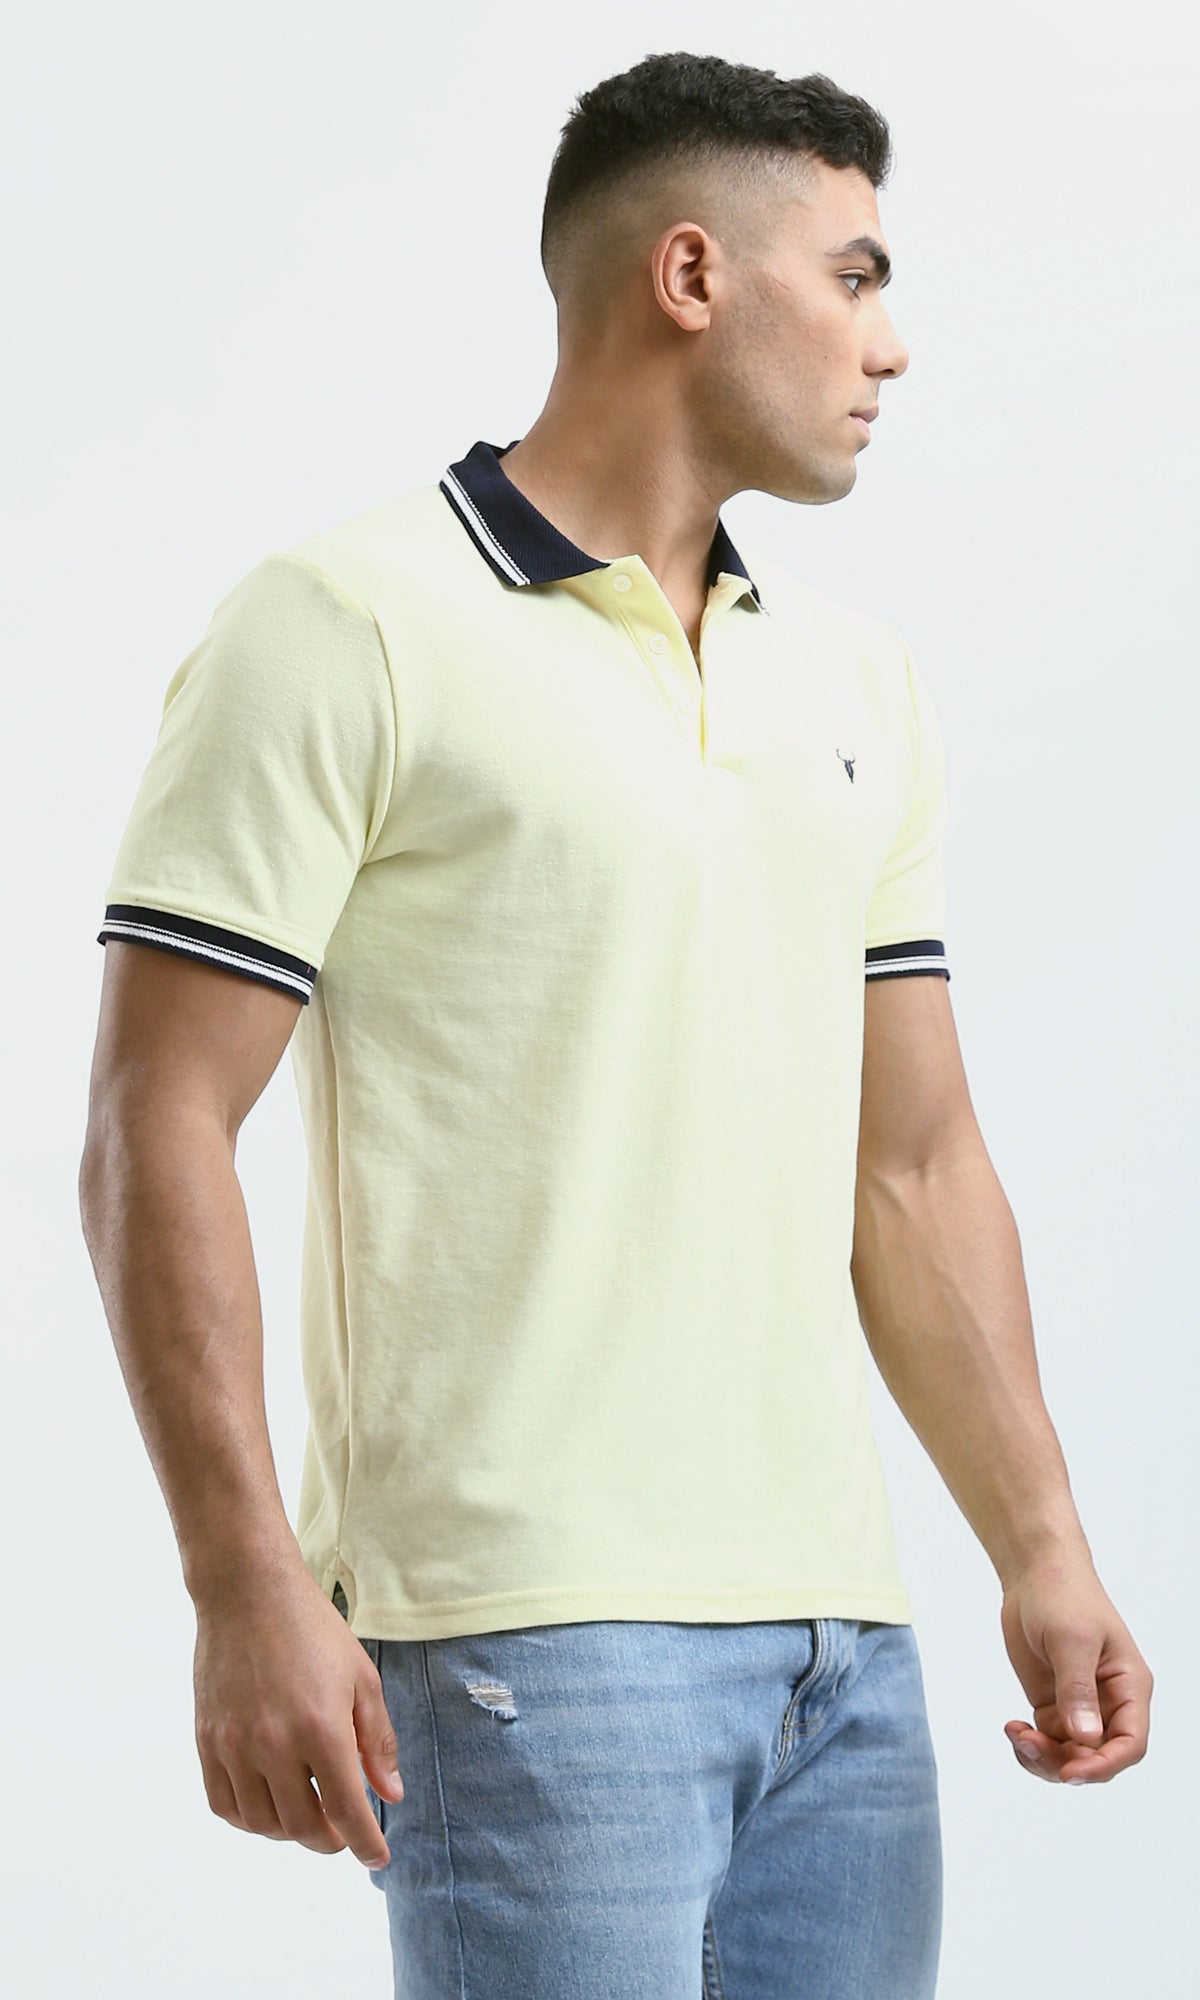 O180821 Lined Short Sleeves Light Yellow Polo Shirt